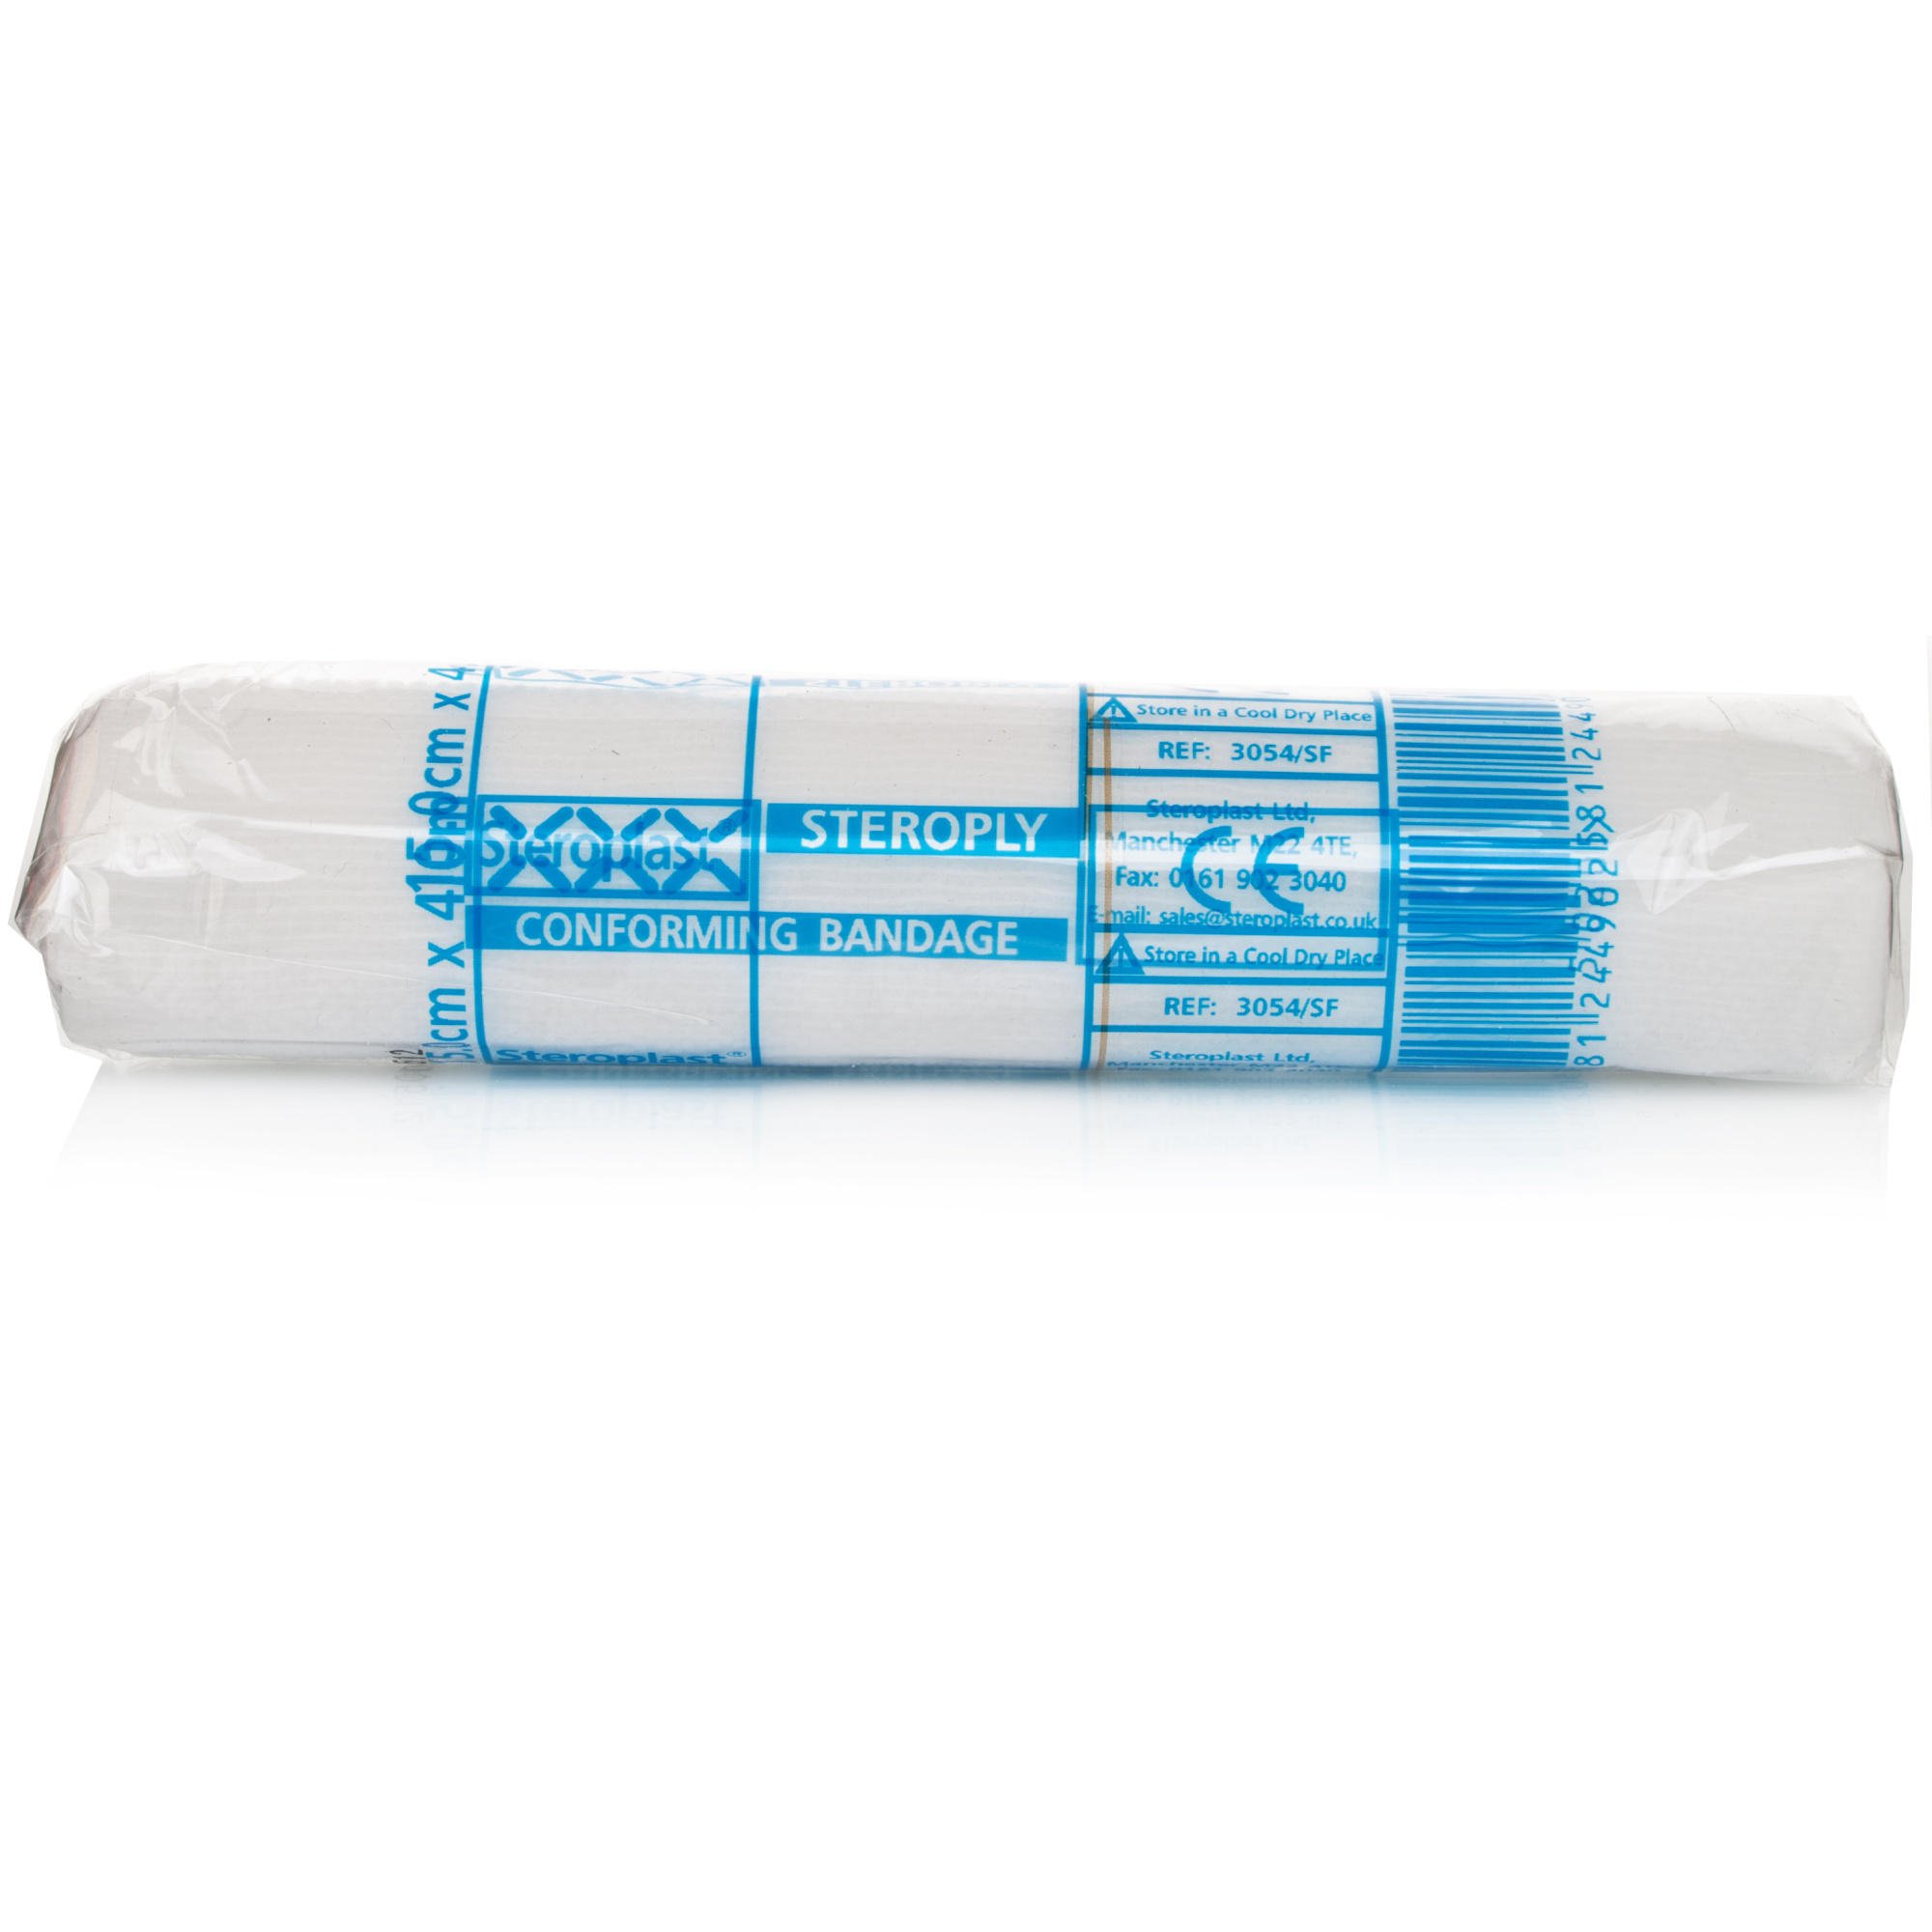 Steroplast Conforming Bandage White 15 cm x 4 m